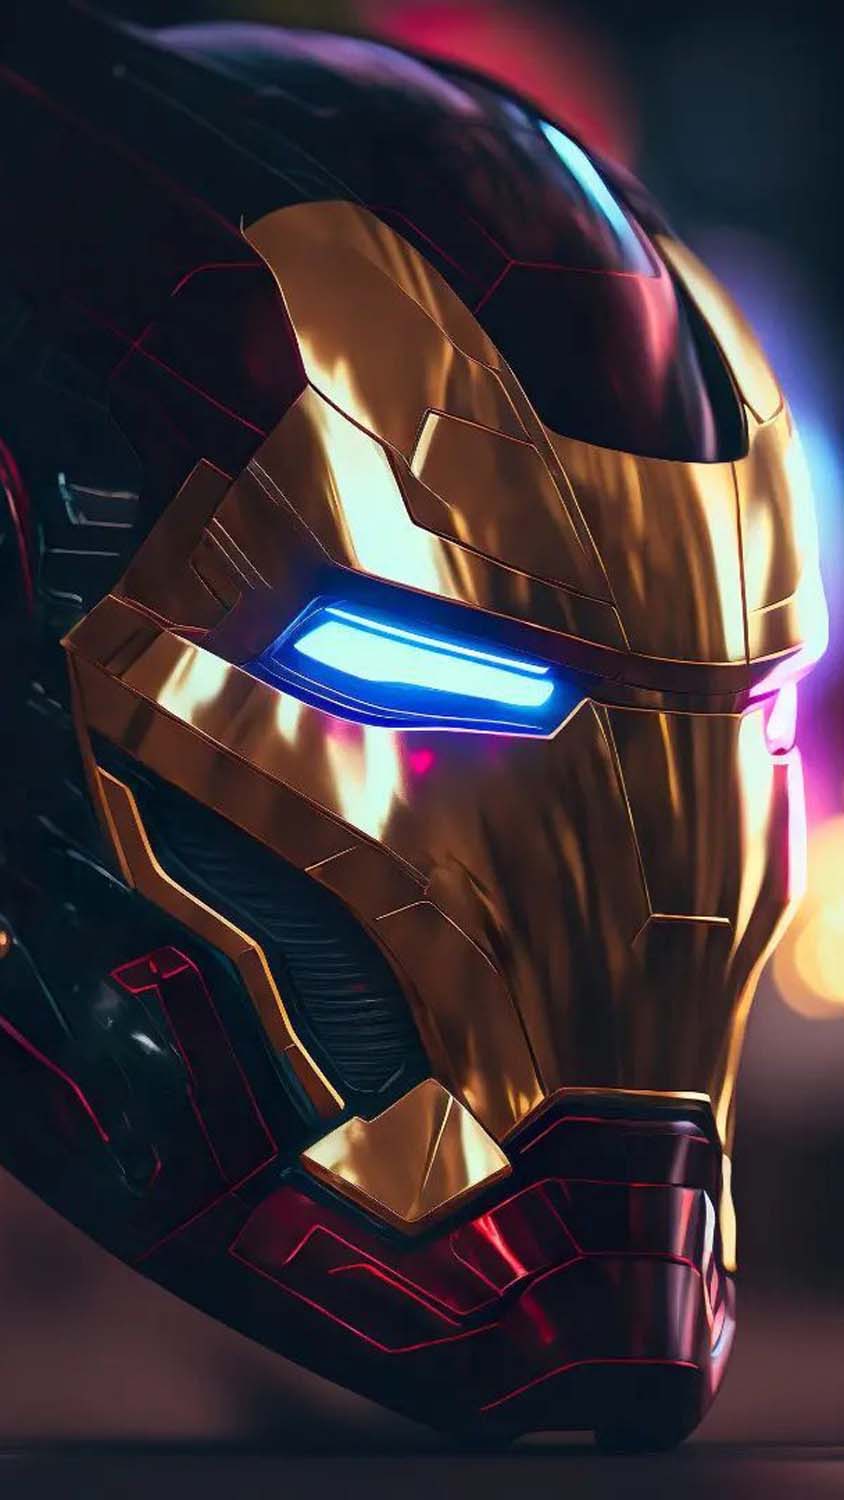 Iron Man Helmet iPhone Wallpaper HD